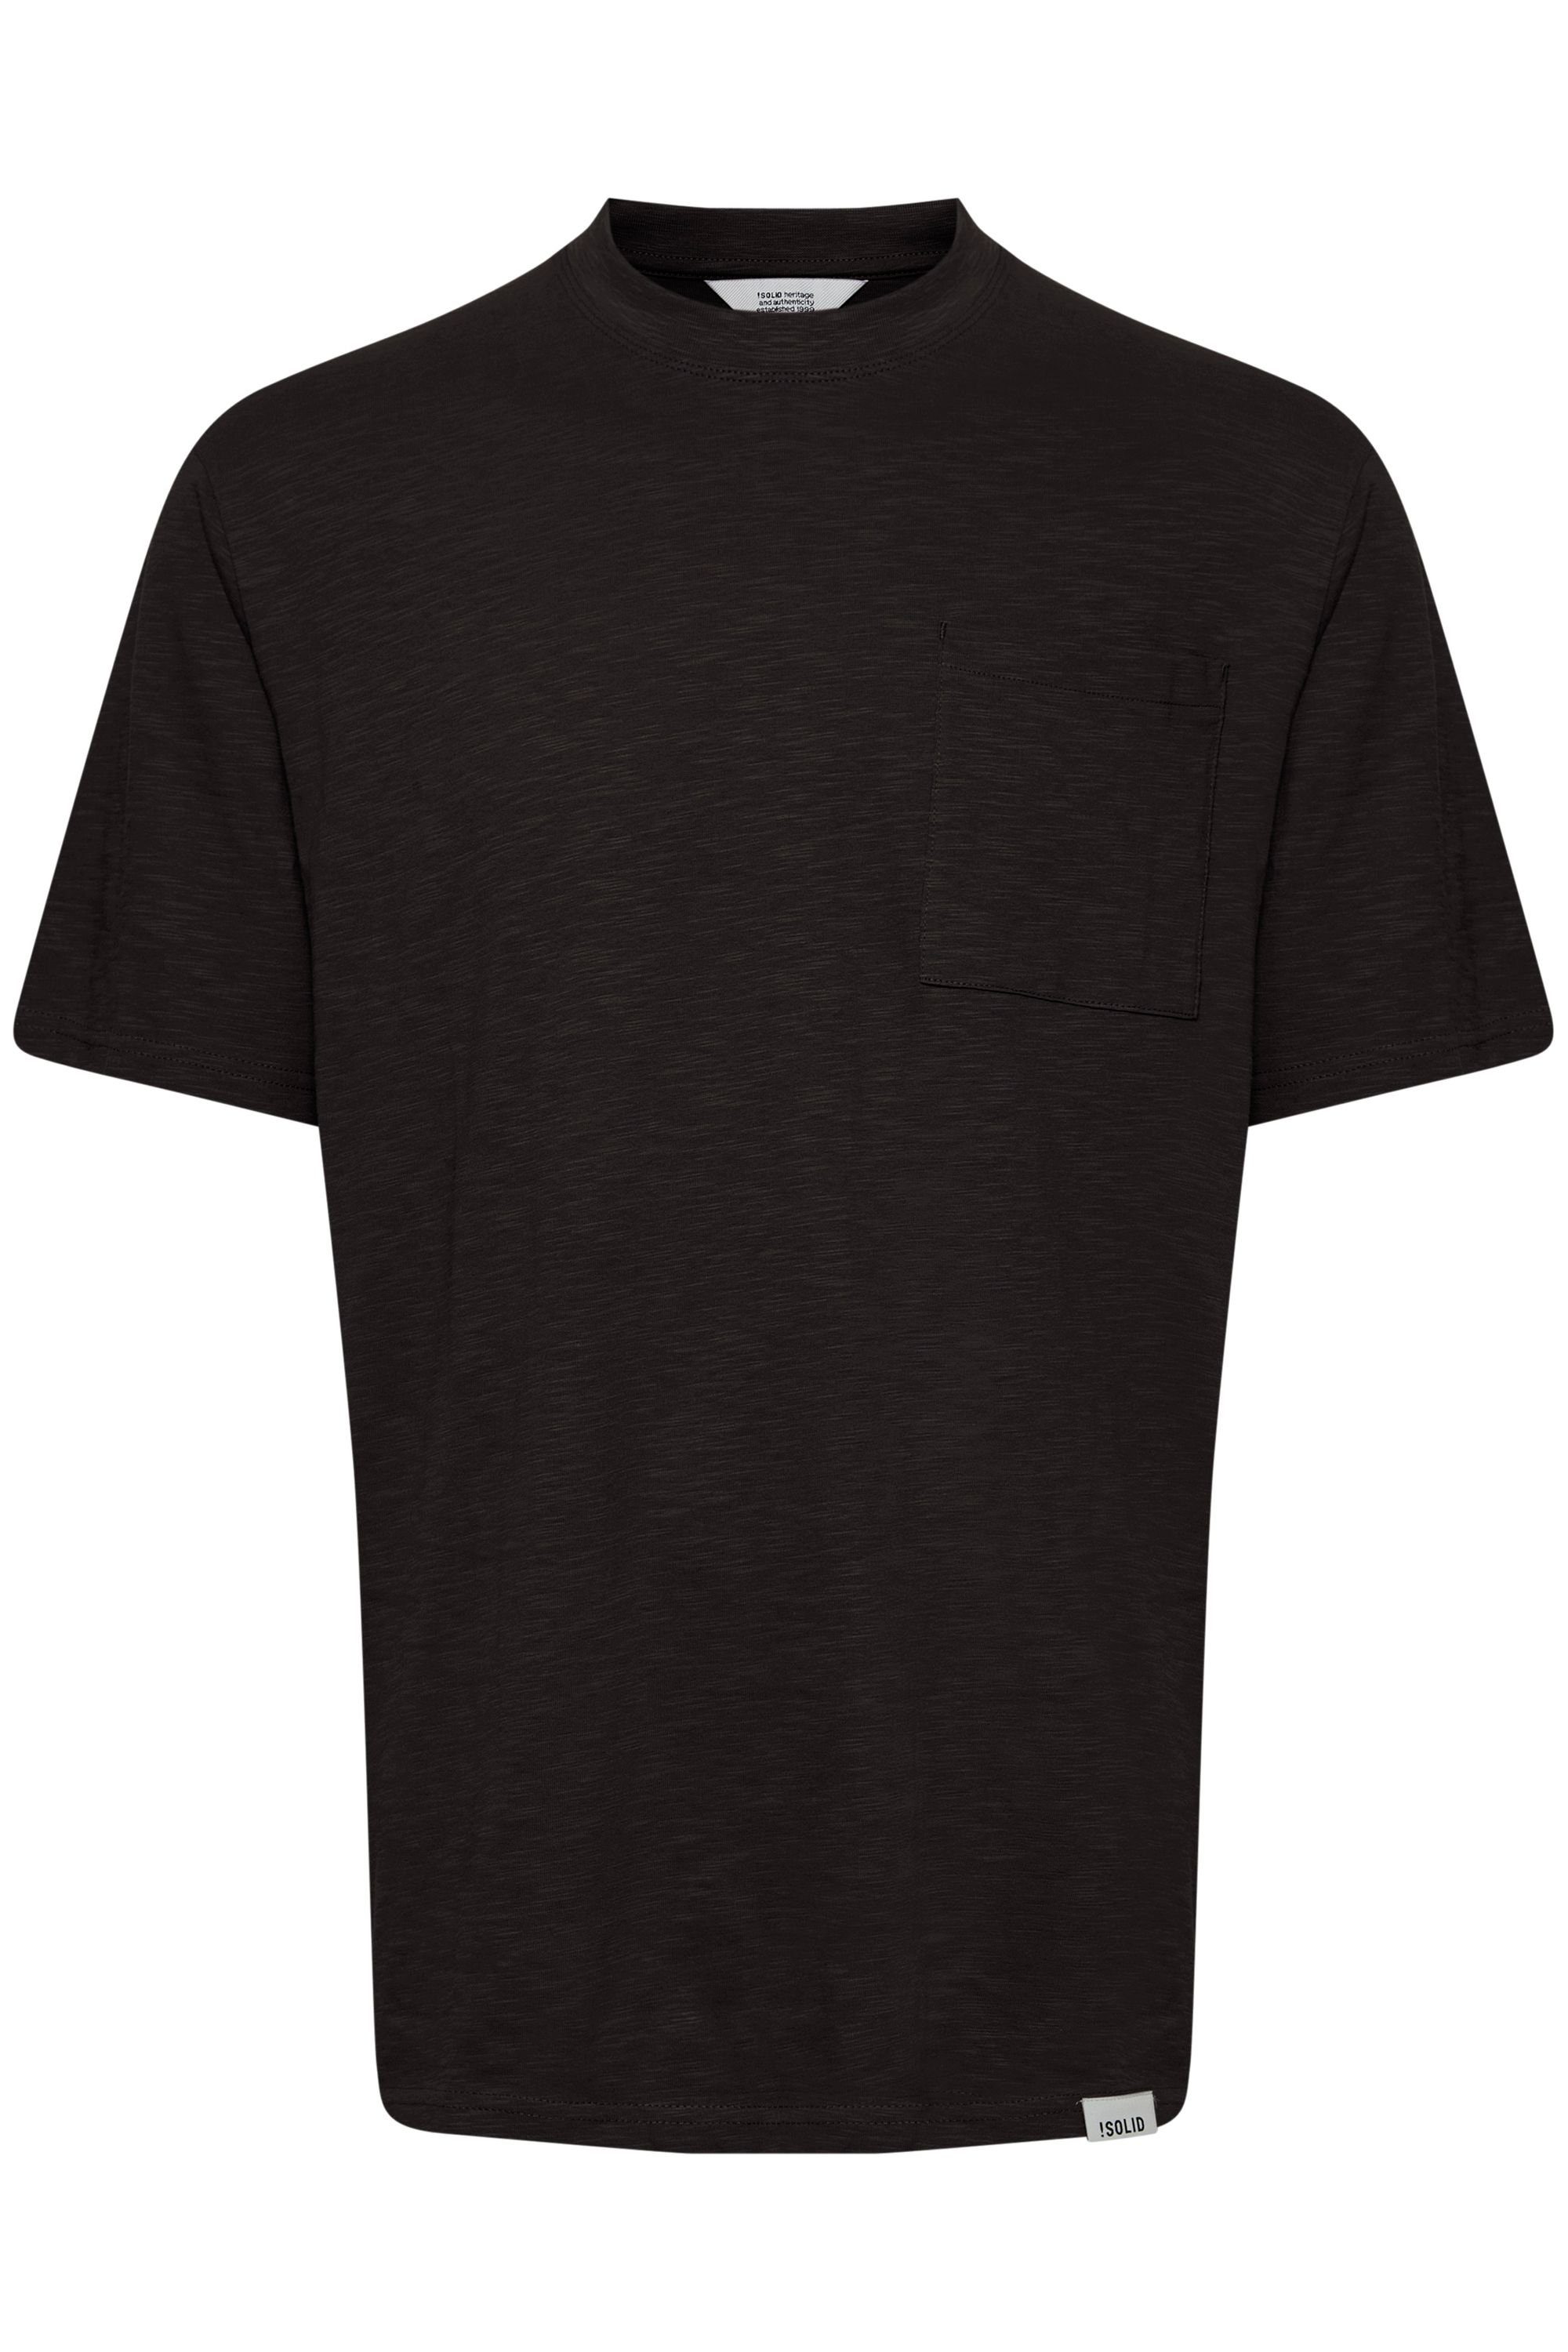 Black !Solid 21107372 (194008) SDDurant T-Shirt S True